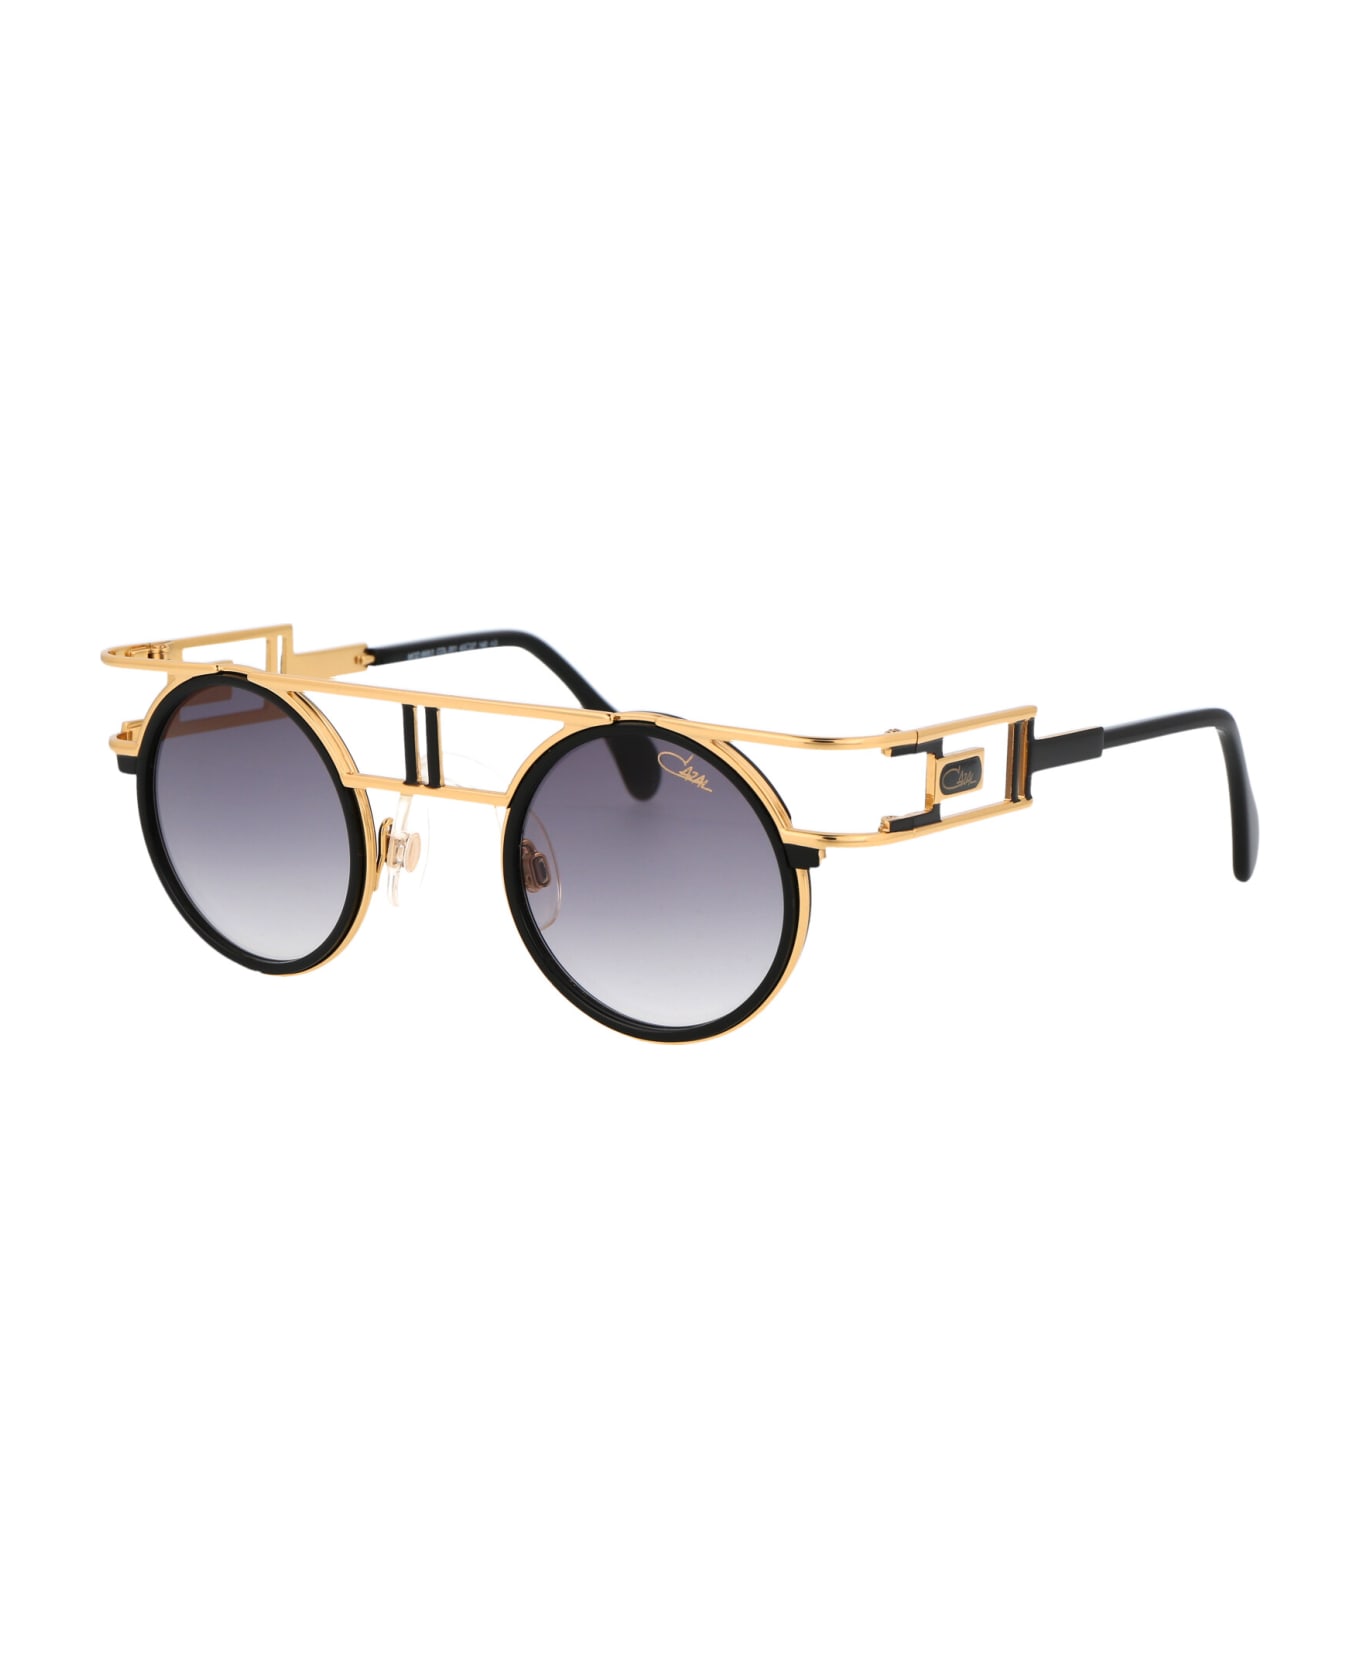 Cazal Mod. 668/3 Sunglasses - 001 BLACK